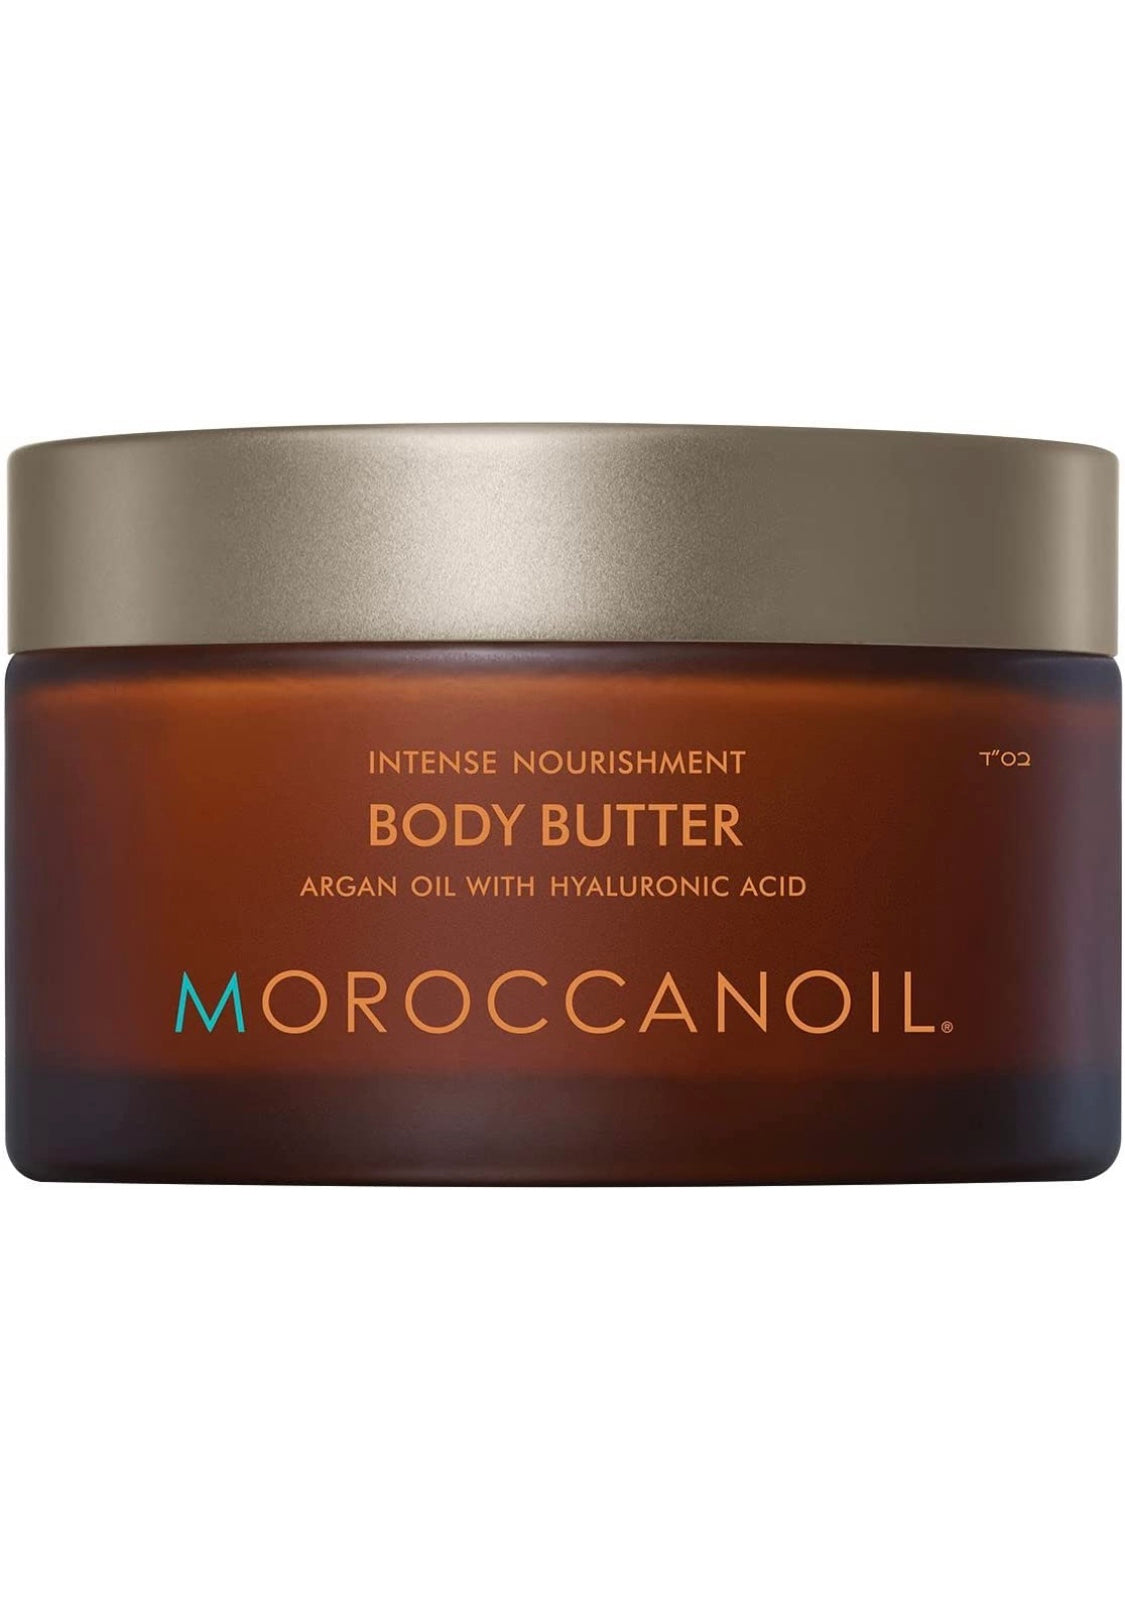 Moroccanoil - Body butter  6.7 fl. oz./ 200 ml